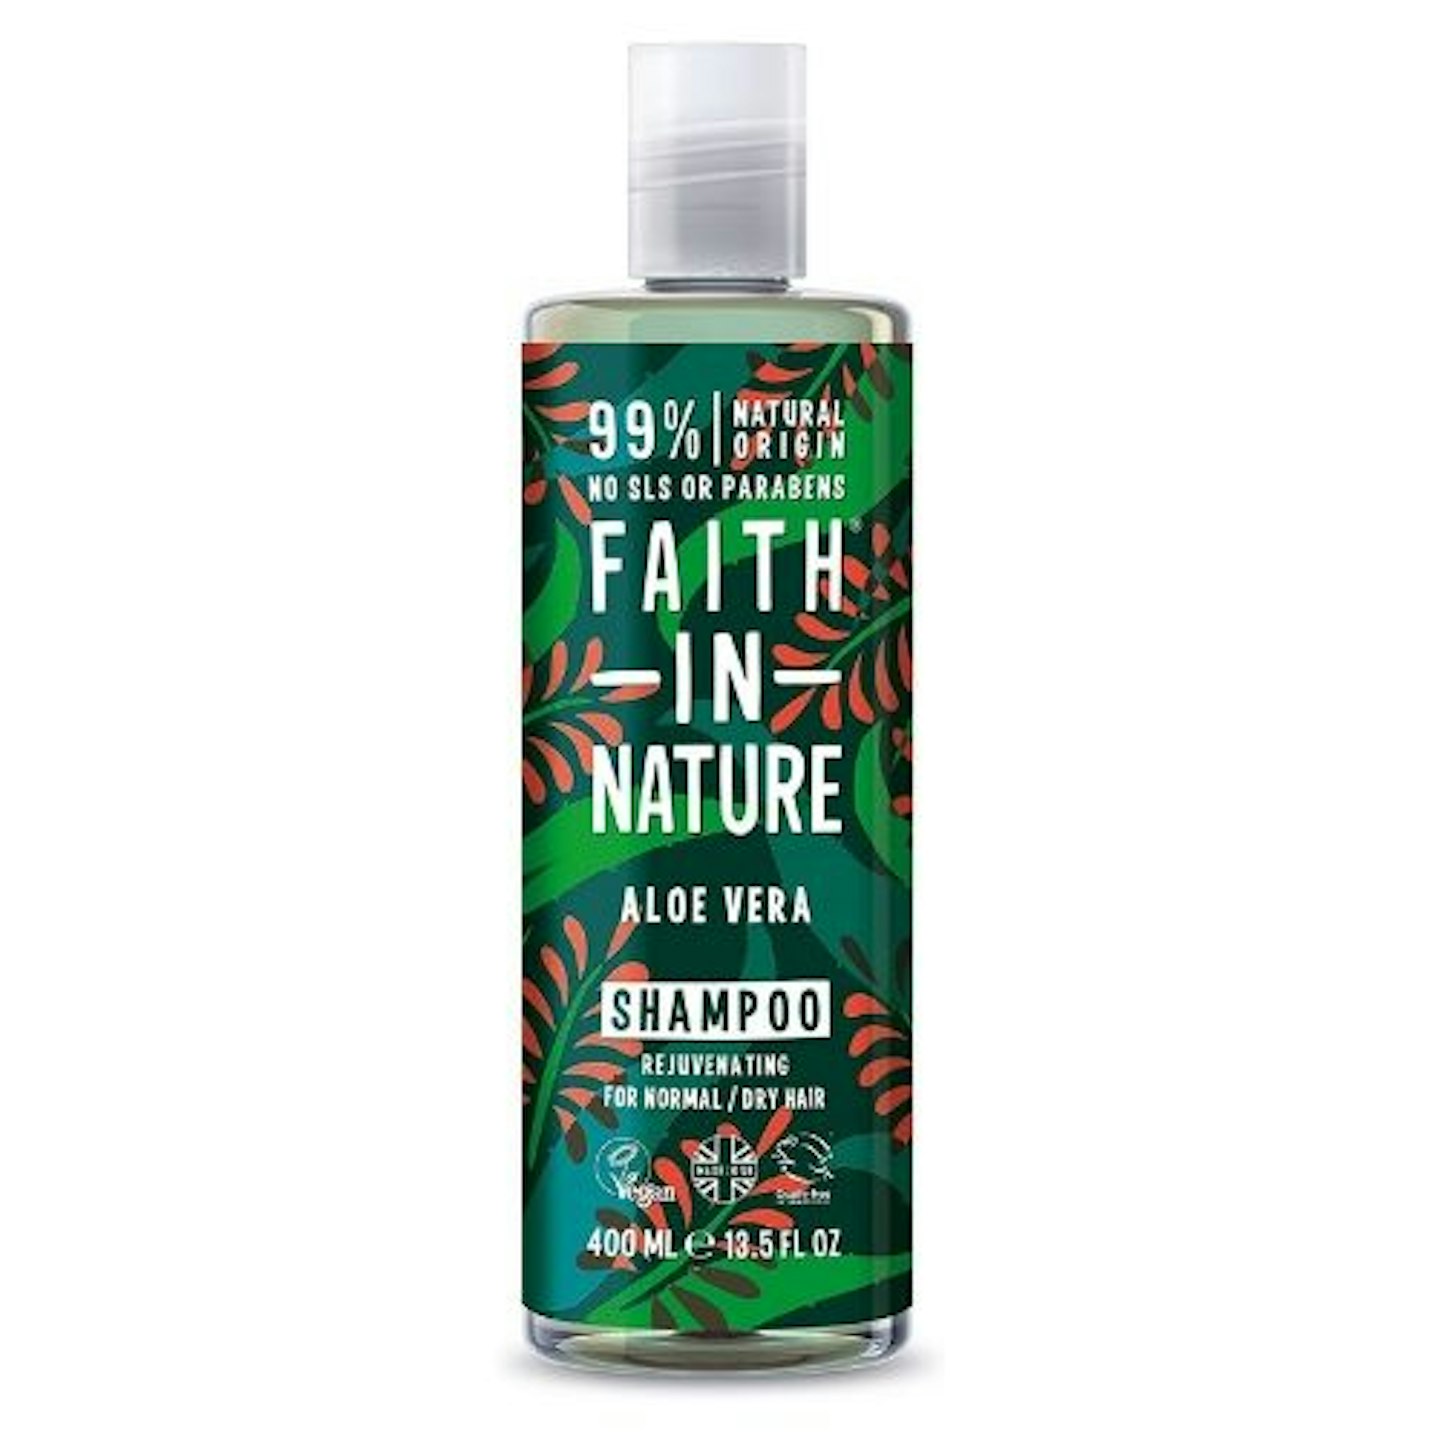 Faith in Nature Natural Aloe Vera Shampoo